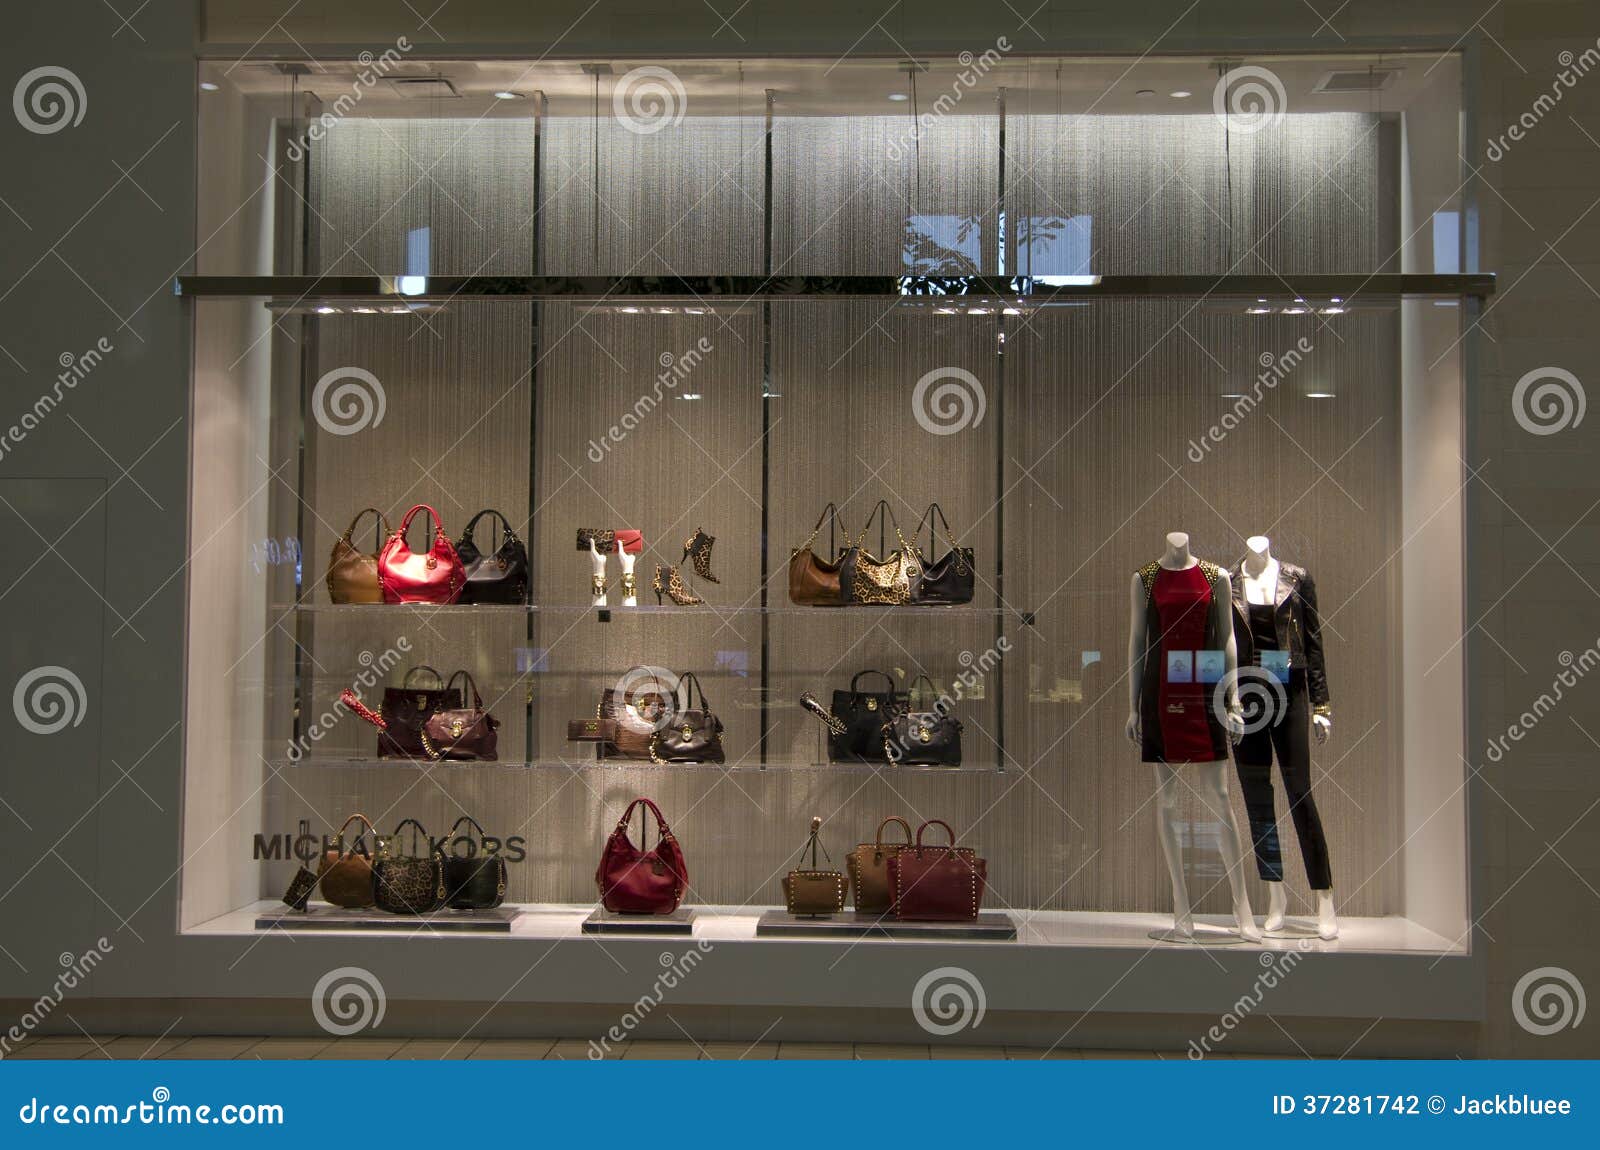 handbag purse store beautiful designs handbags woman clothing michael kors near seattle 37281742